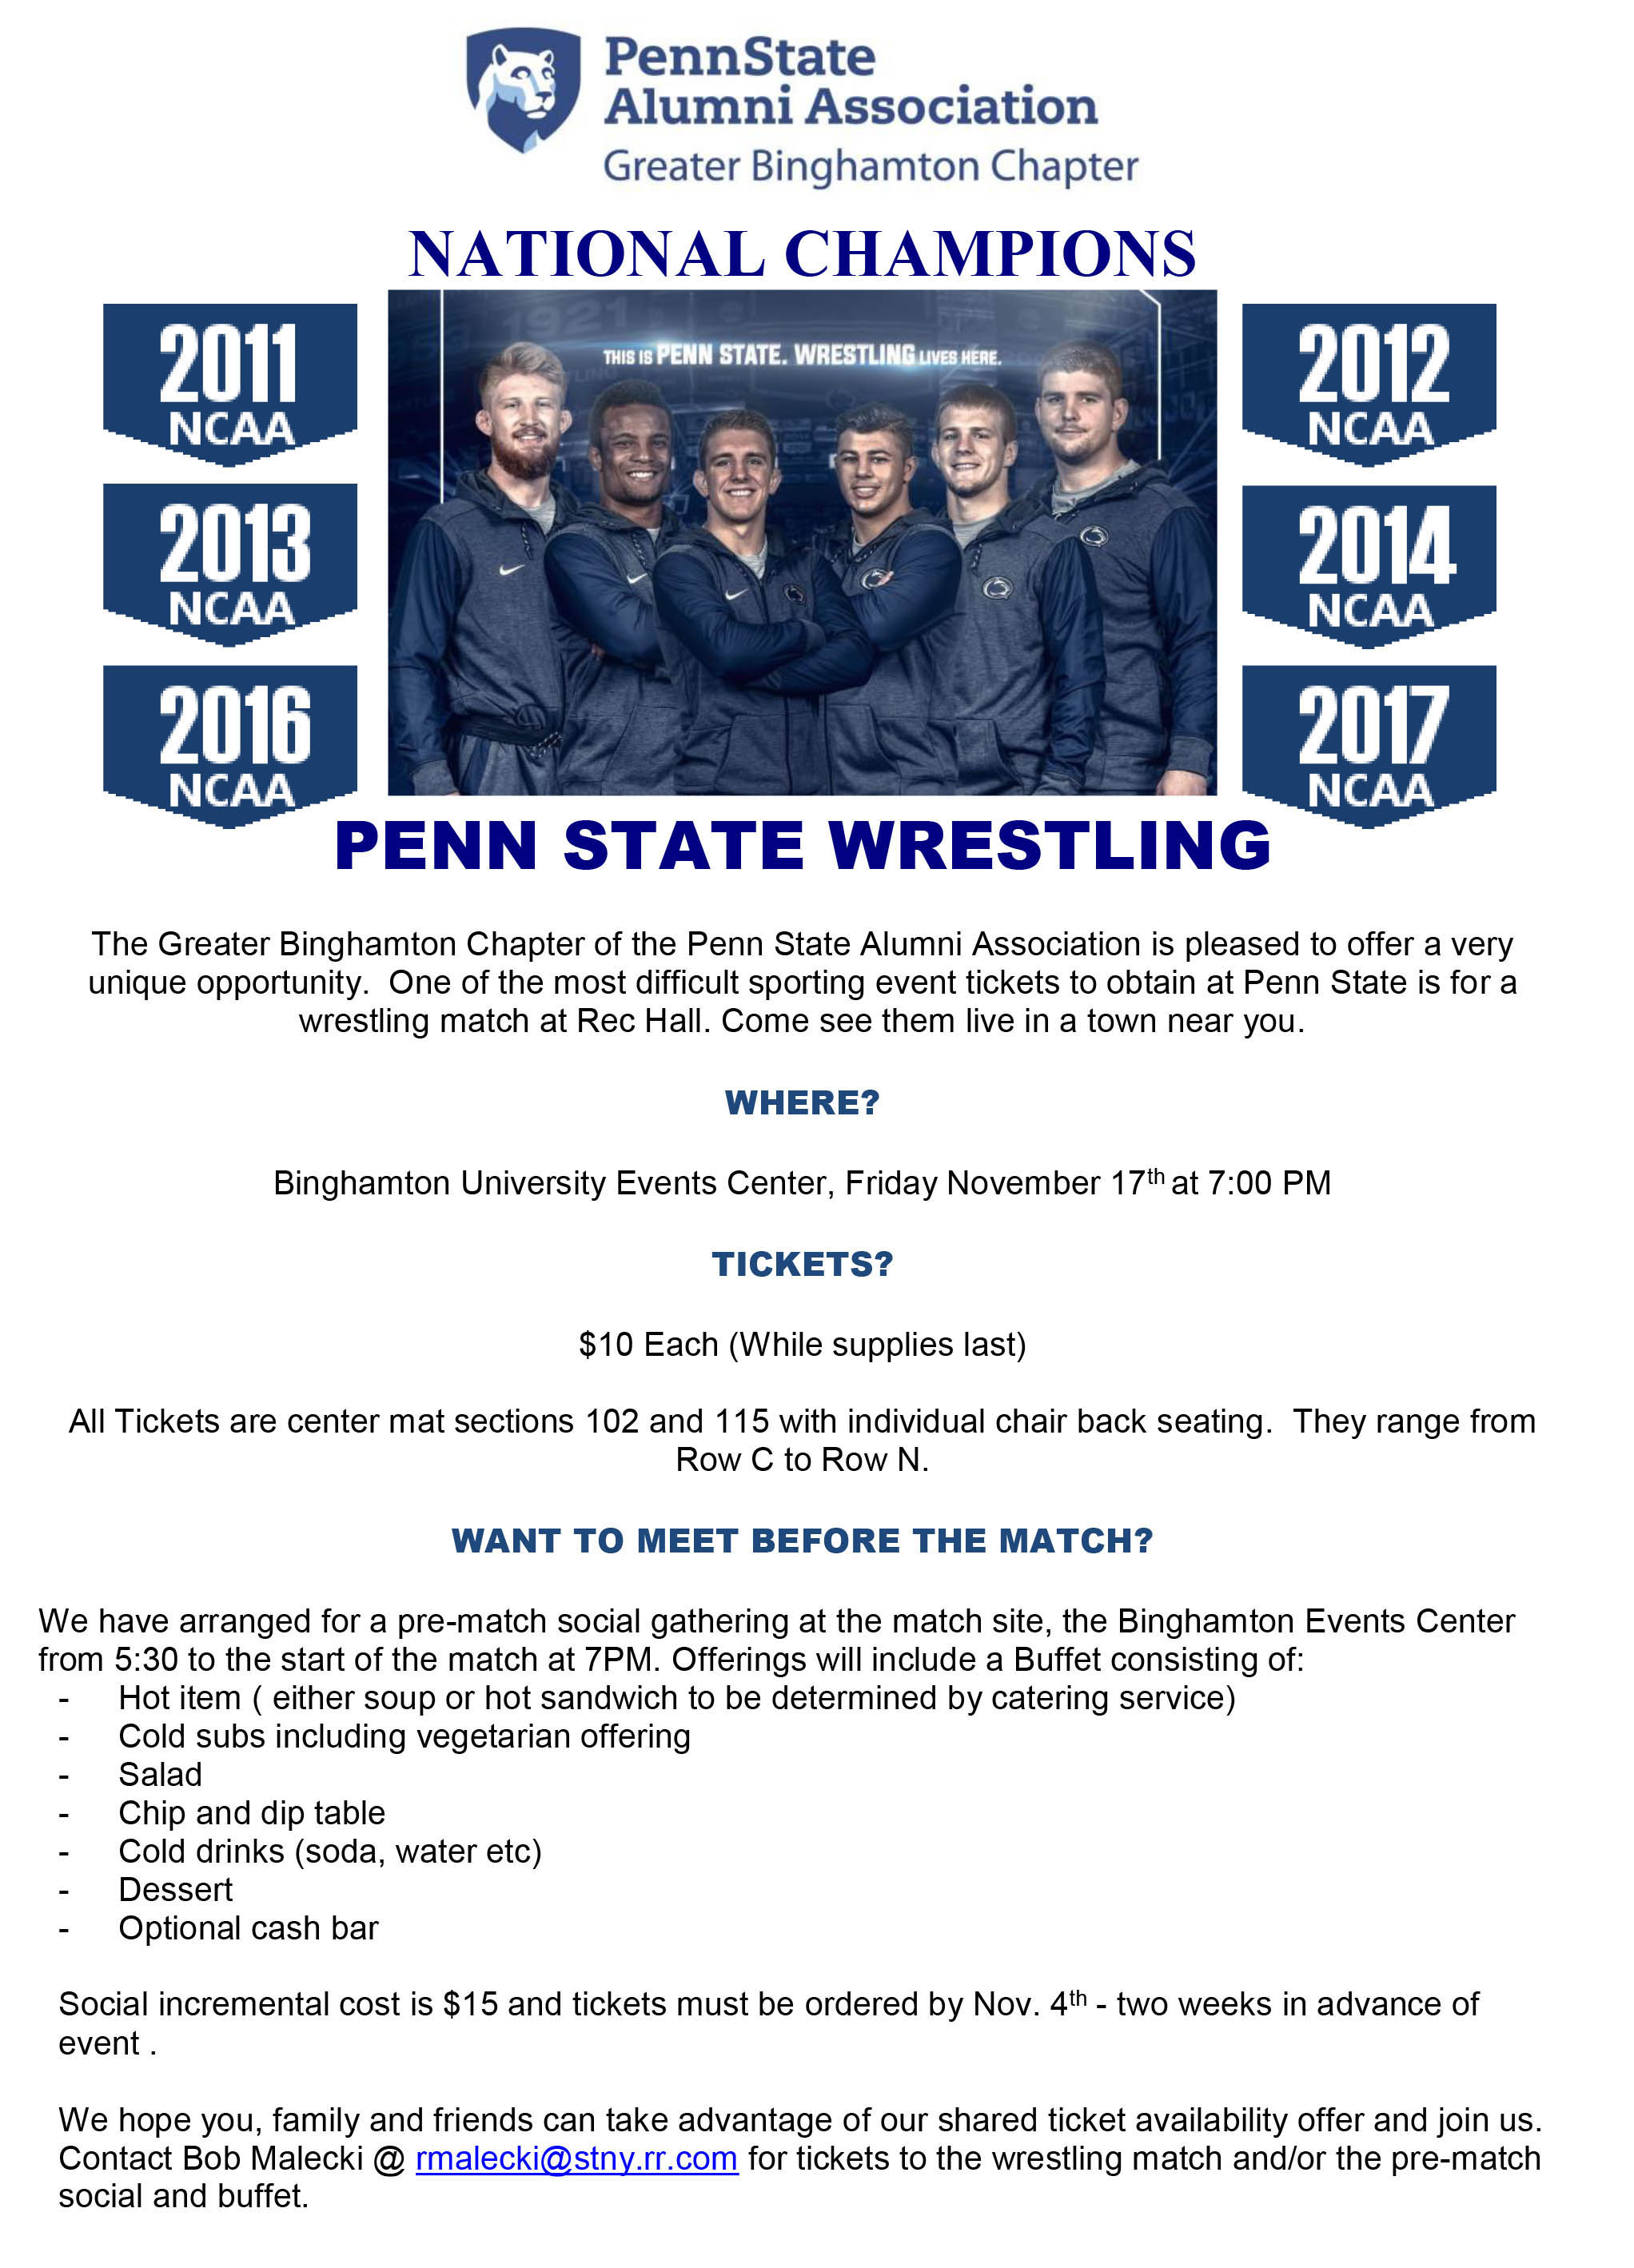 UPDATE! PSU Wrestling BU TICKET + SOCIAL EVENT Greater Binghamton